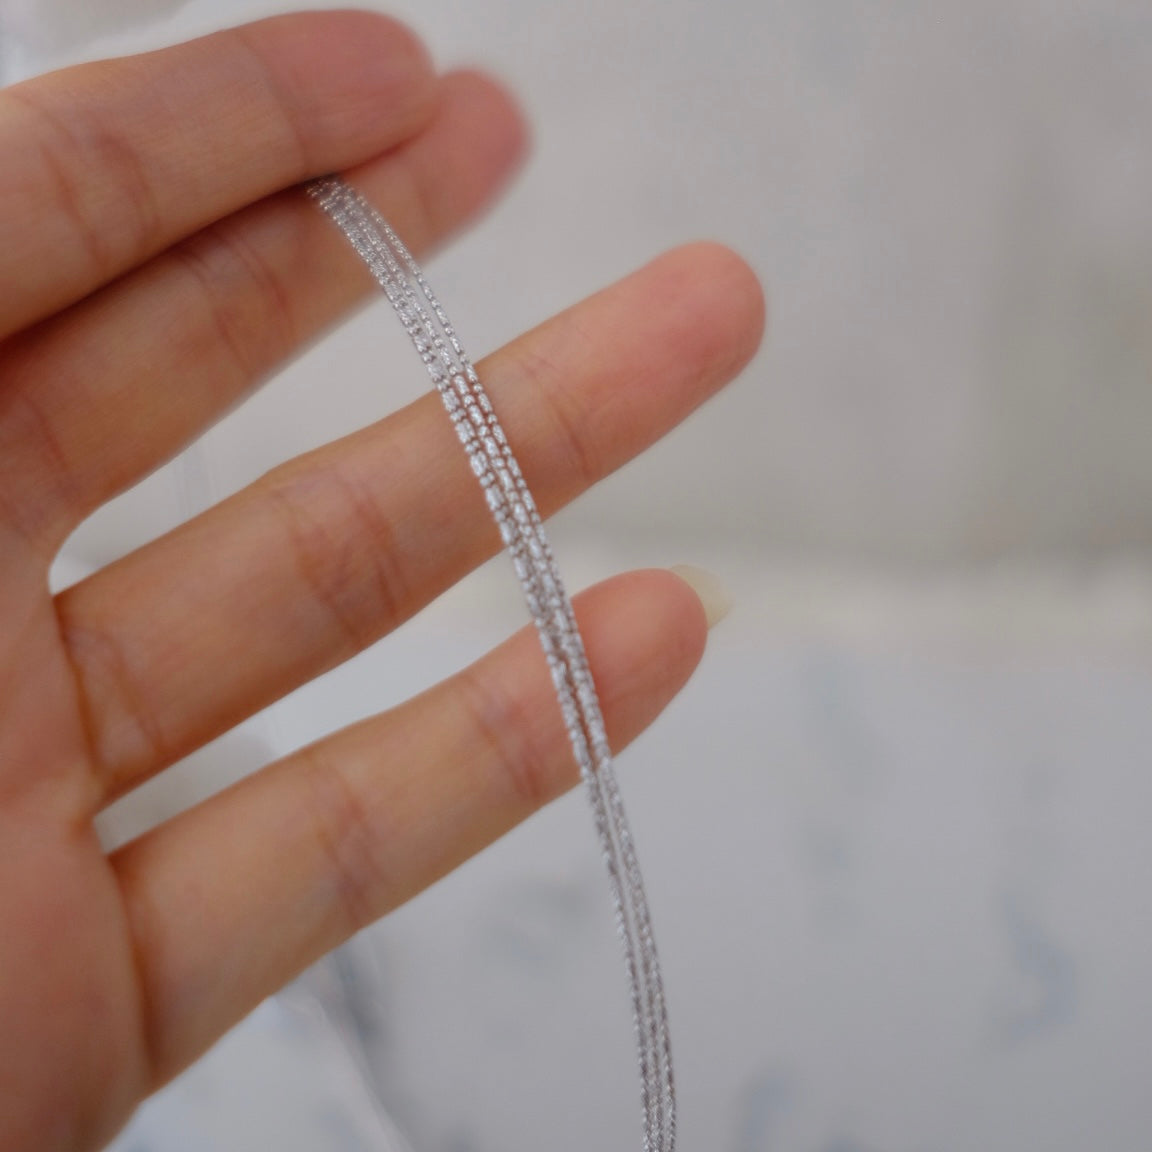 AU750, Japan Made 18k Collar Chain, 40+5cm, 1.48g